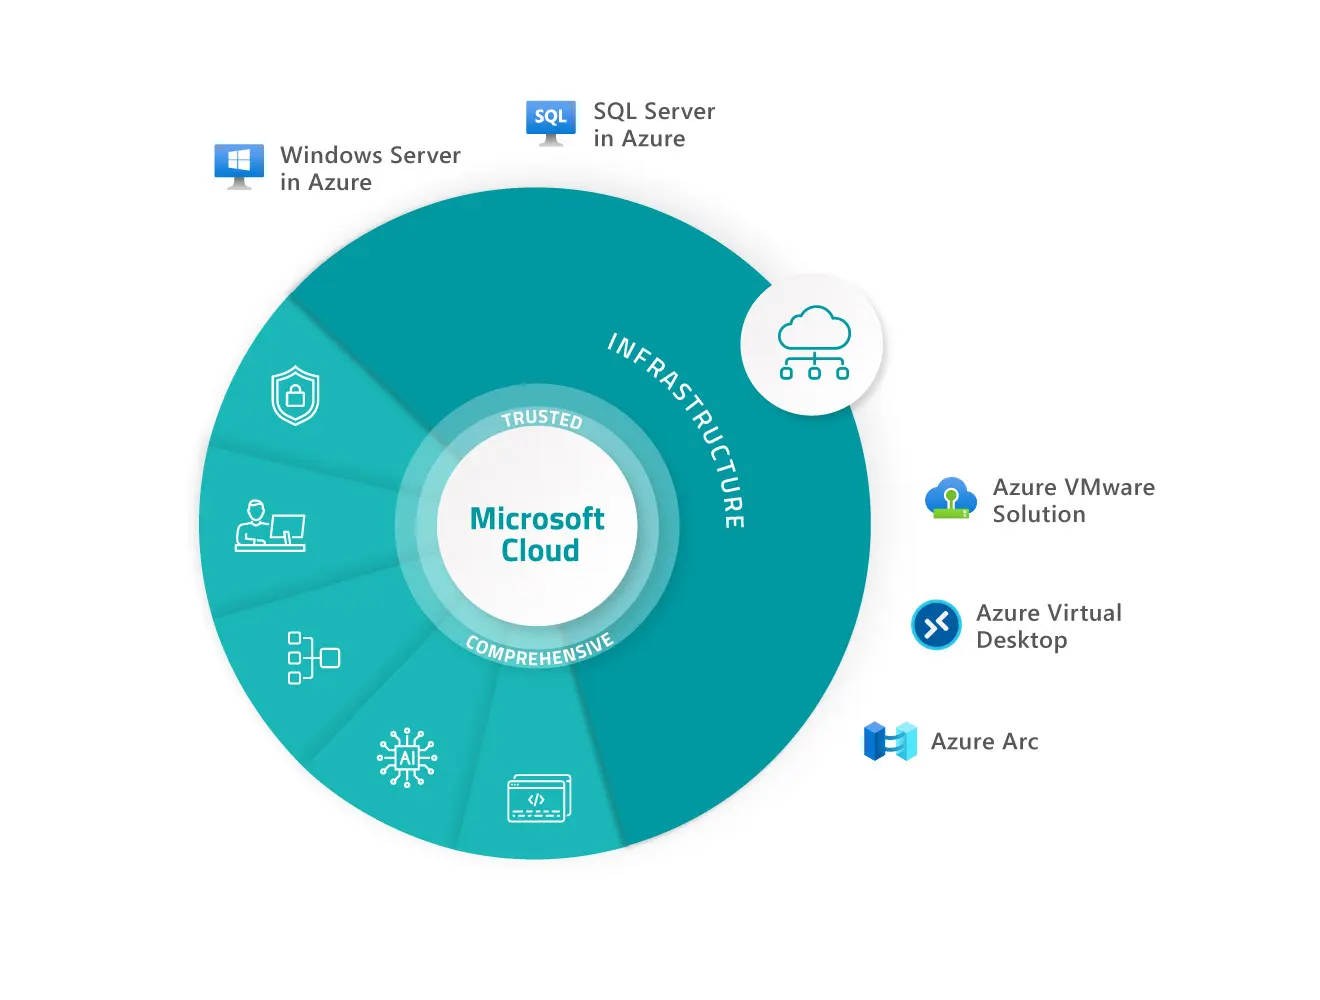 Microsoft Cloud infrastructure components including Windows Server in Azure, SQL Server in Azure, Azure VMware Solution, Azure Virtual Desktop, and Azure Arc.